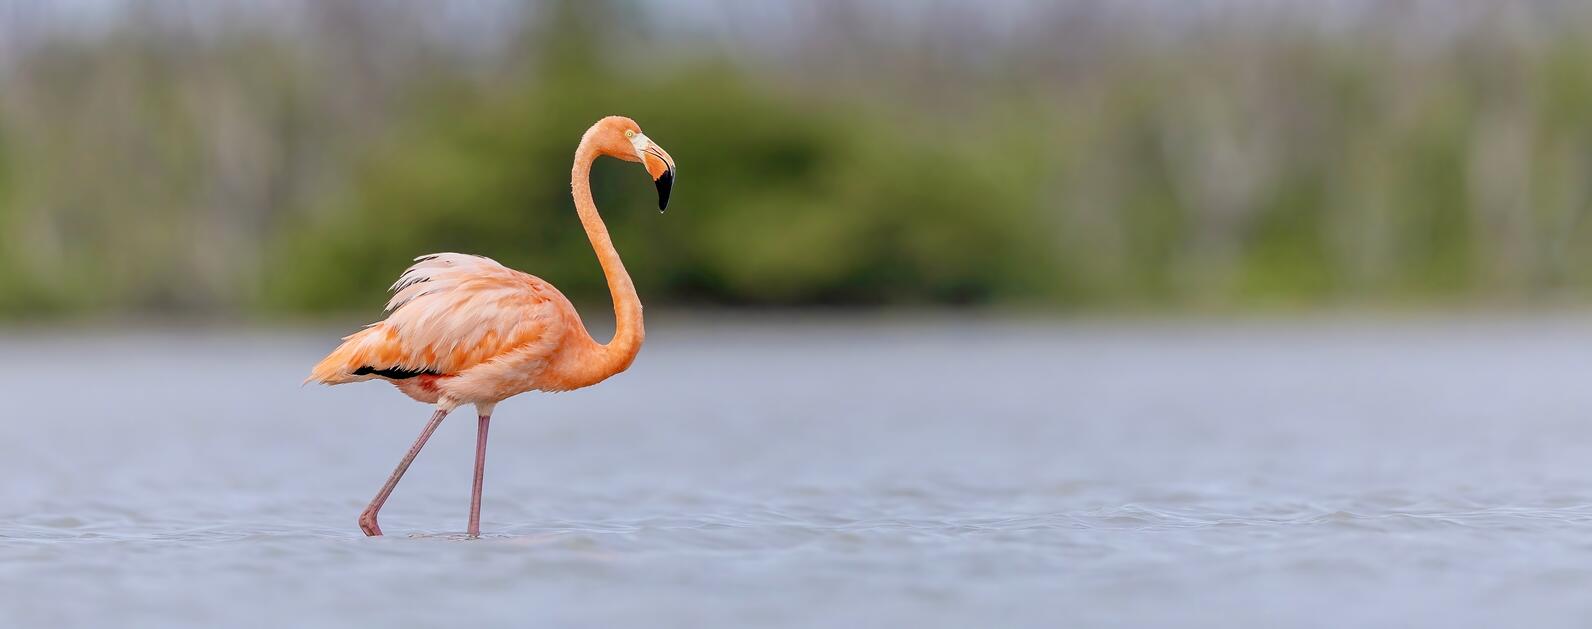 A lone flamingo